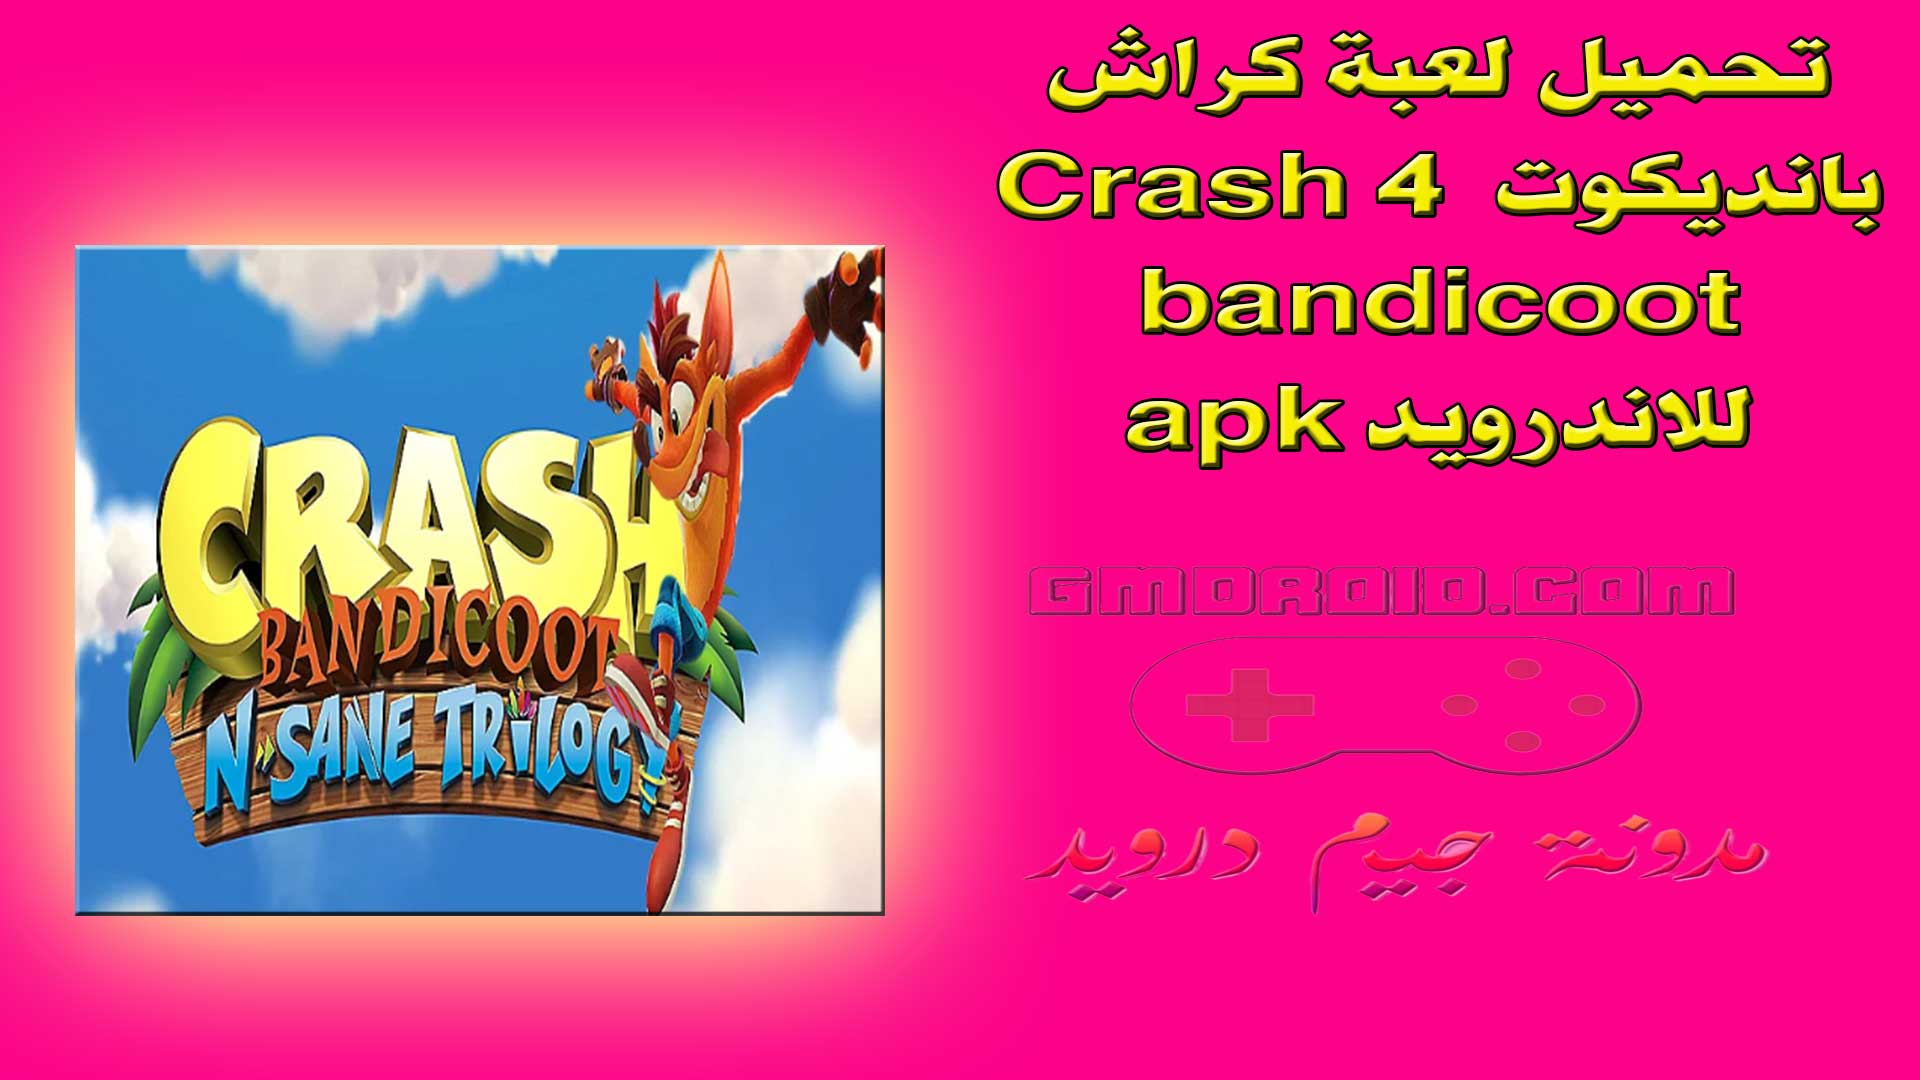 تحميل لعبة كراش بانديكوت 4 Crash bandicoot للاندرويد apk